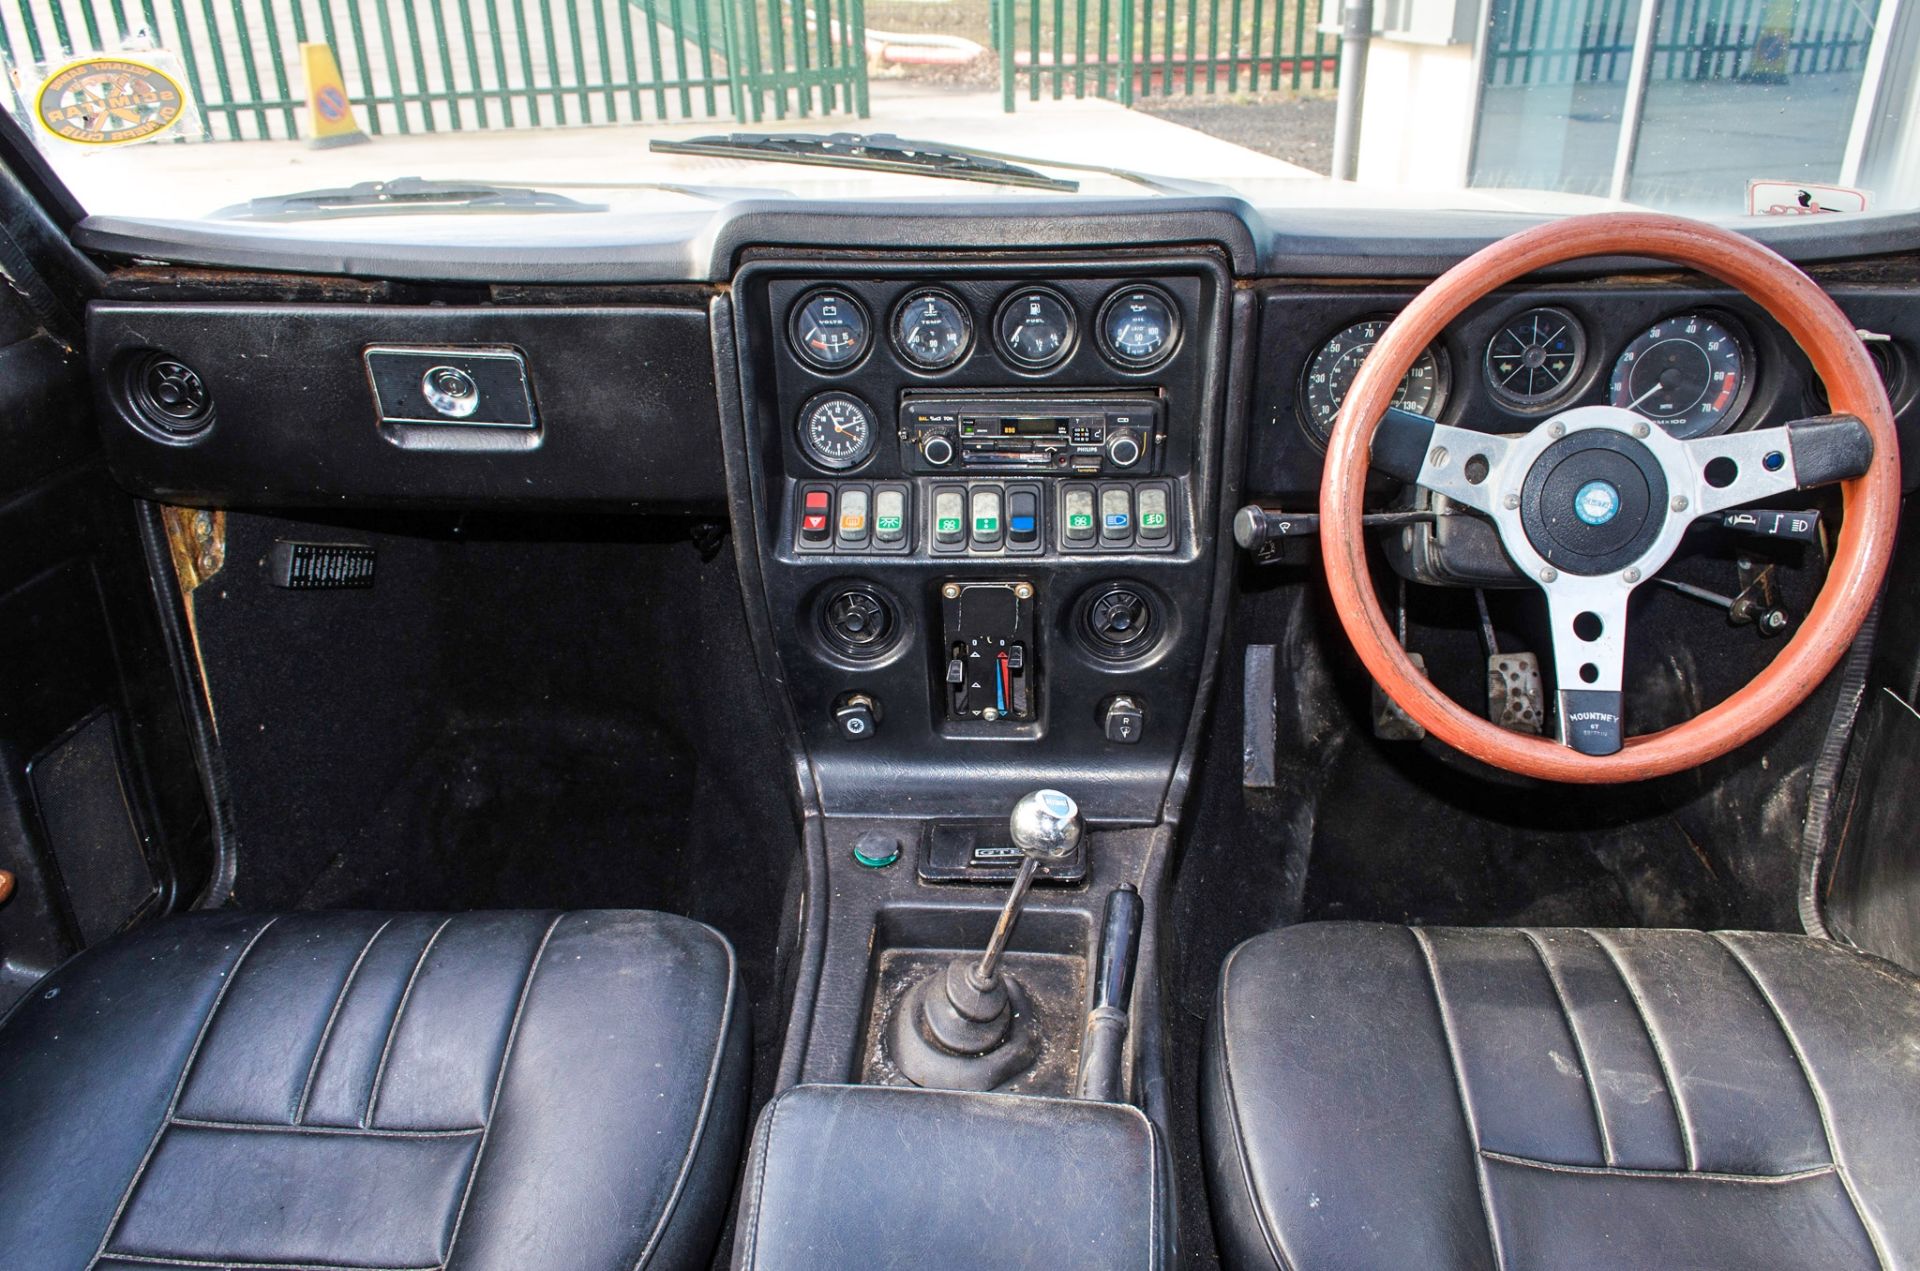 1977 Reliant Scimitar GTE E Odve 2944cc 2 door saloon - Image 41 of 56